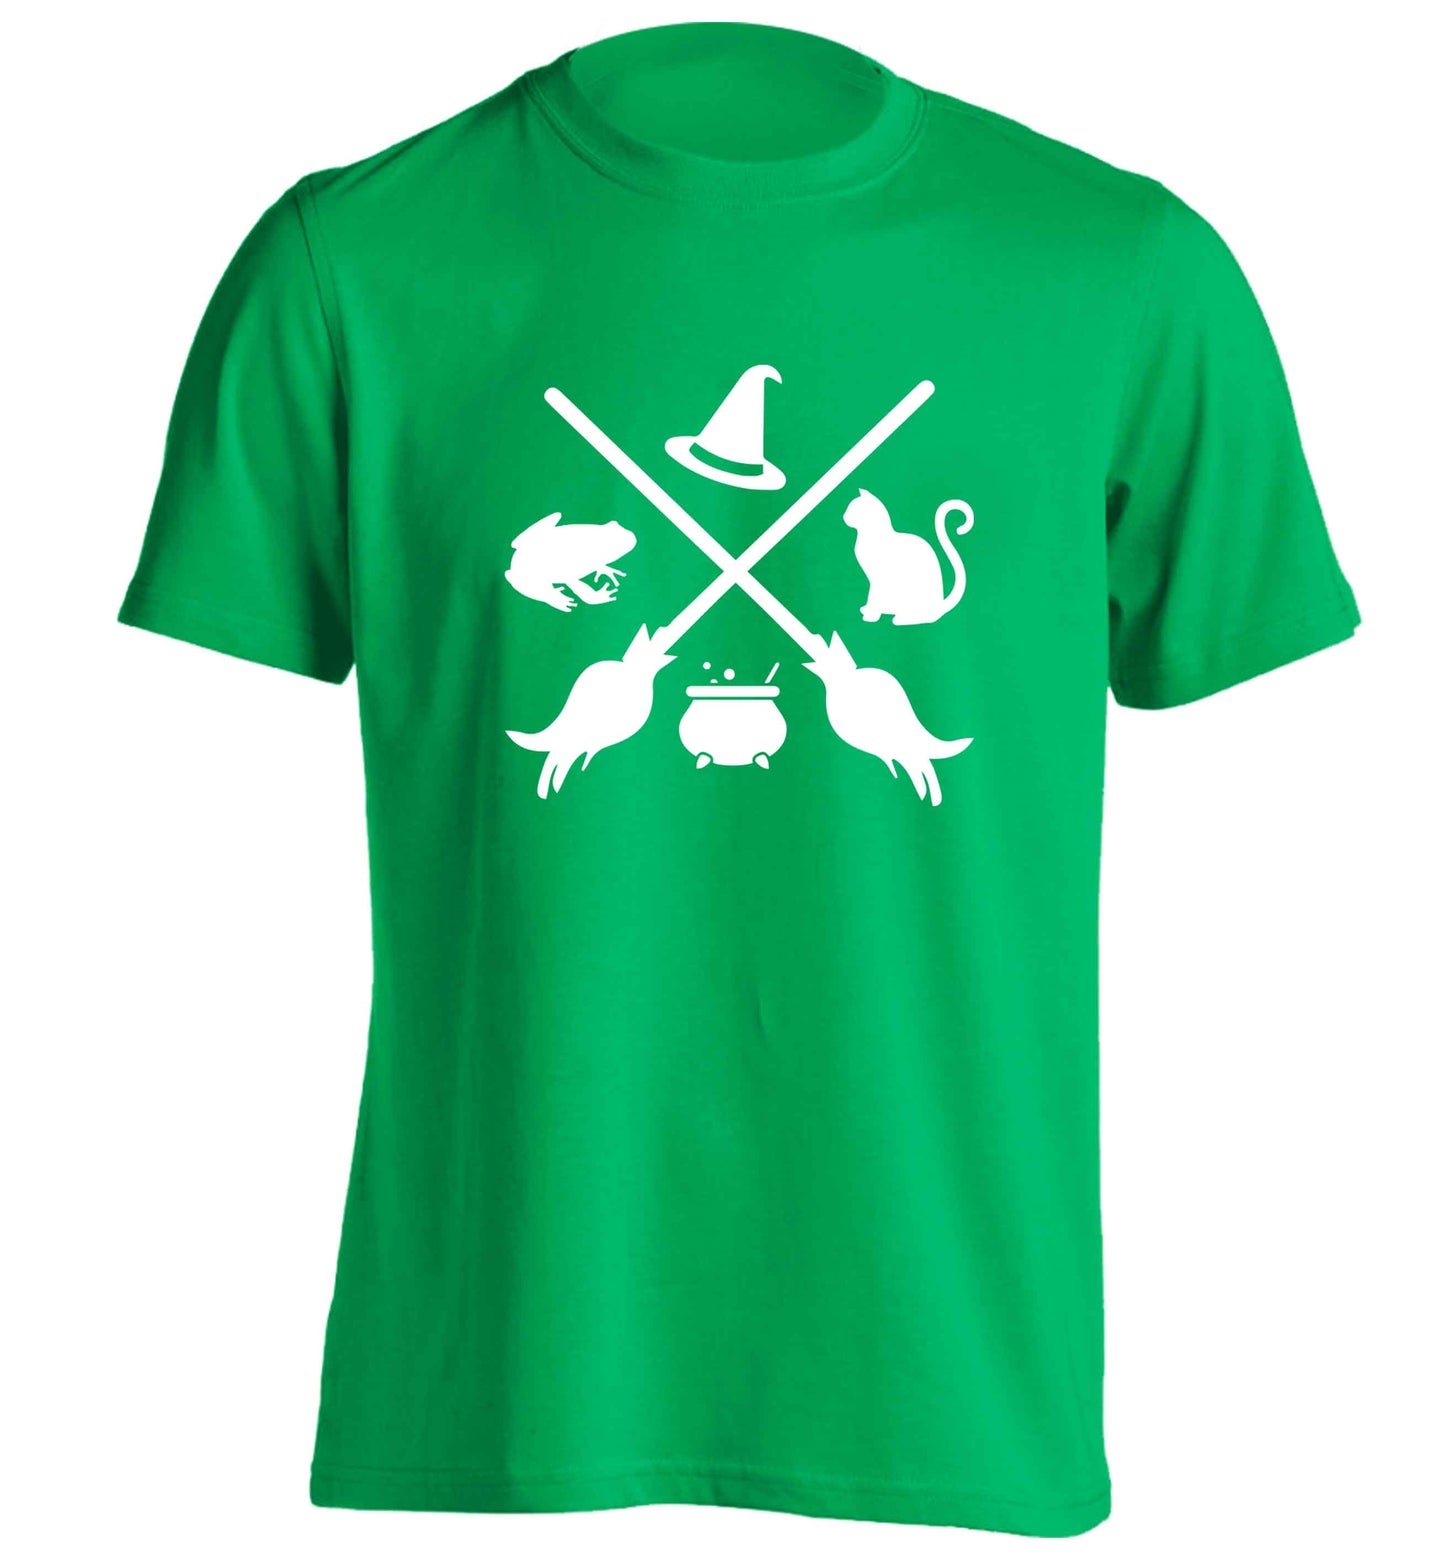 Witch symbol adults unisex green Tshirt 2XL